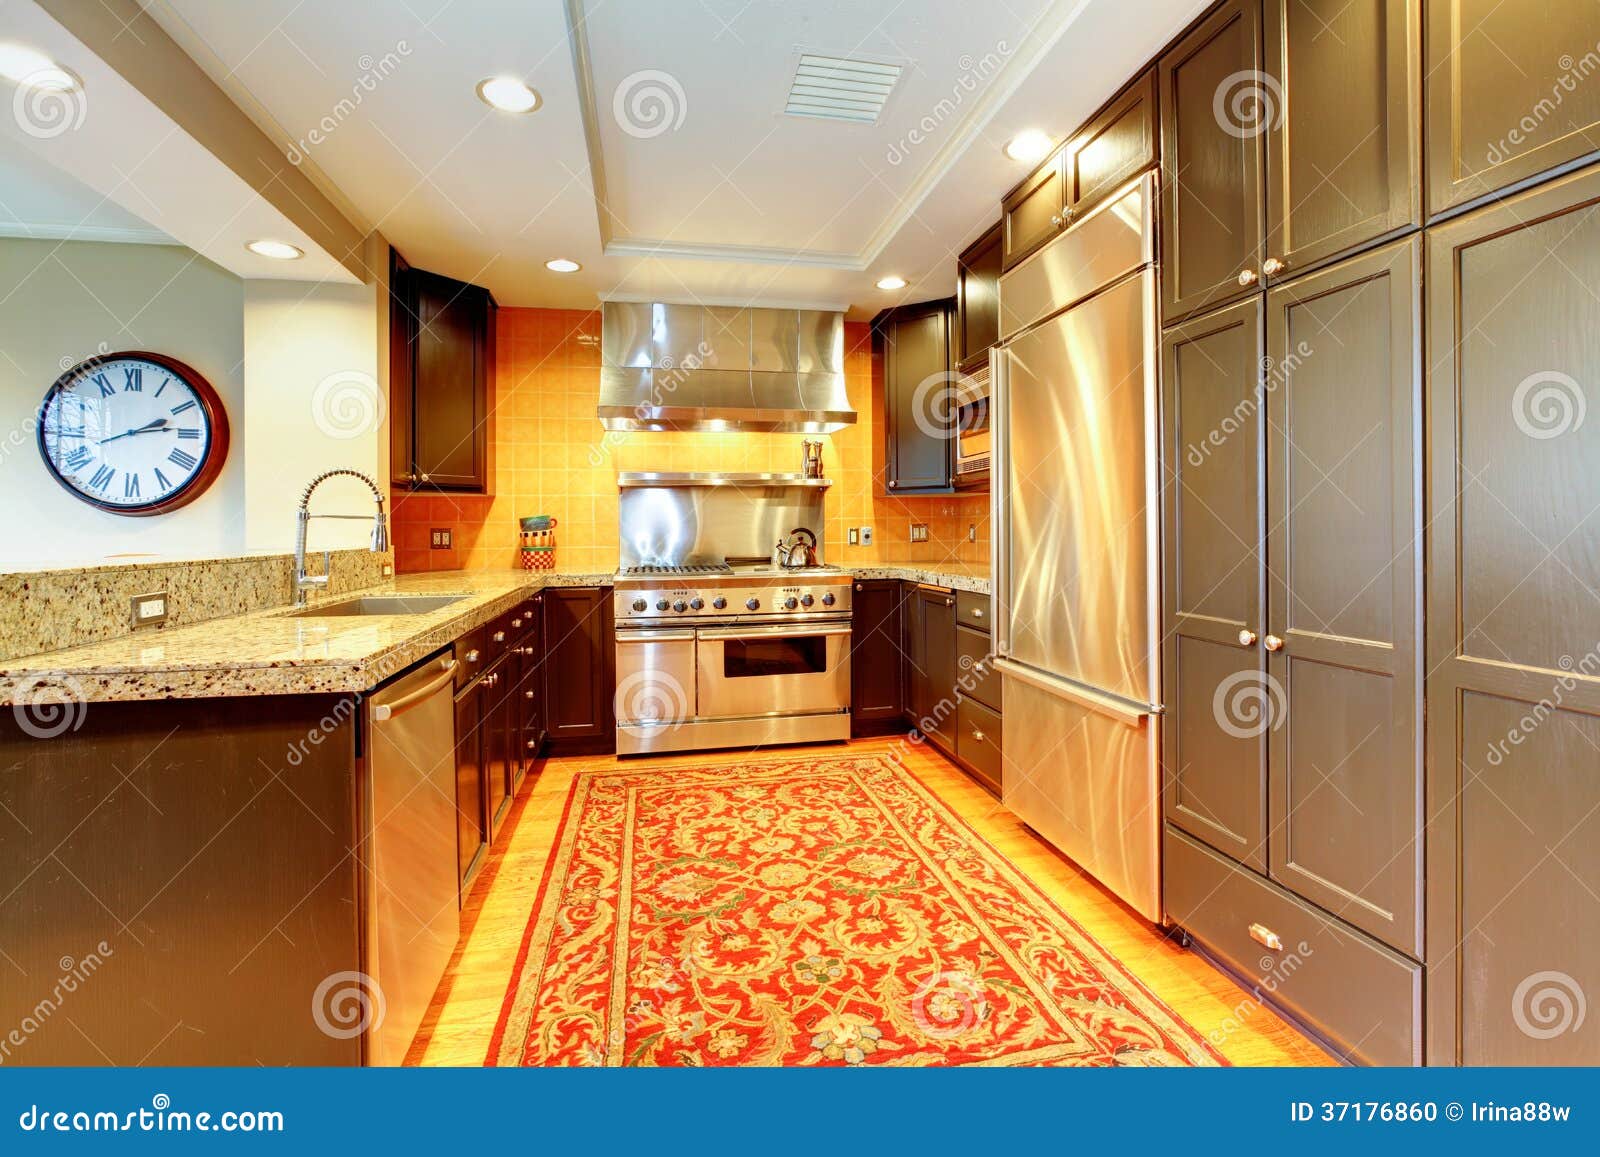 Shiny Kitchen With Black Wood Cabinets Stock Photo Image Of